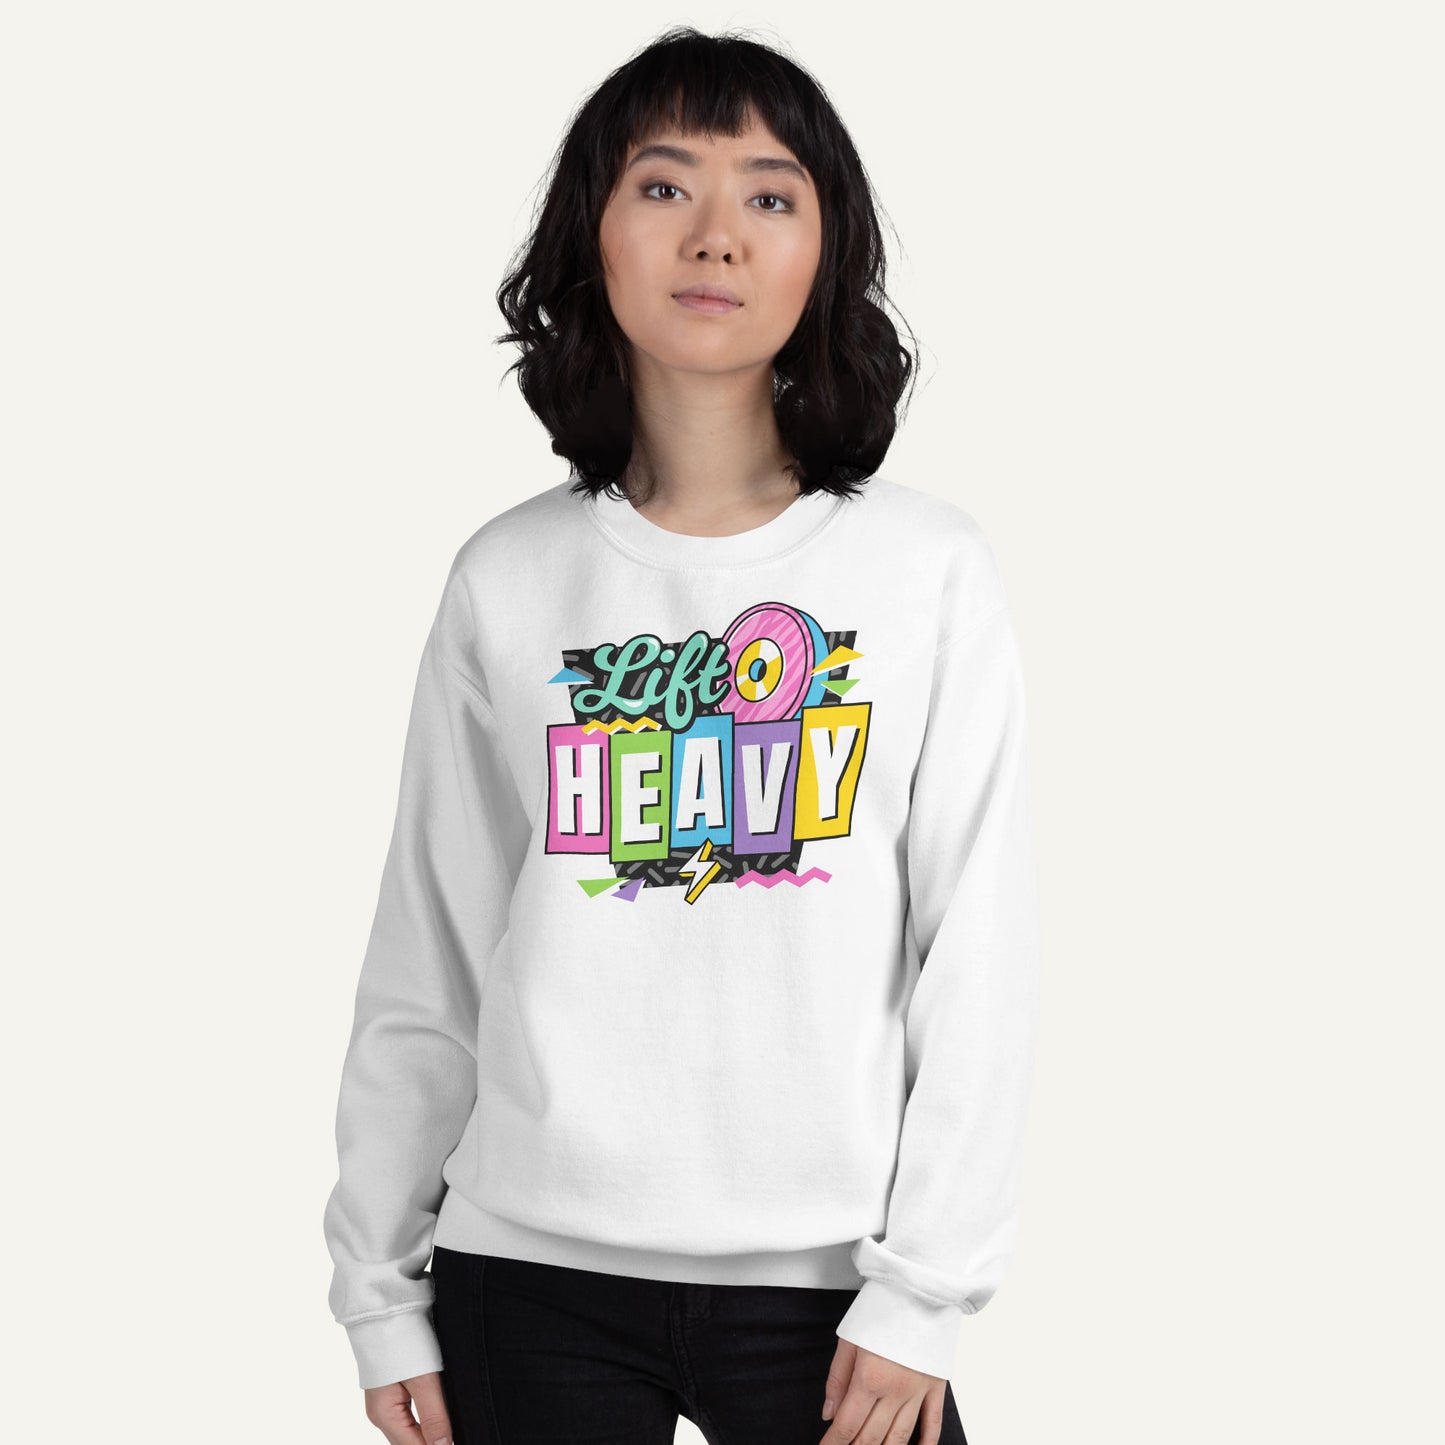 Lift Heavy 90s Sweatshirt